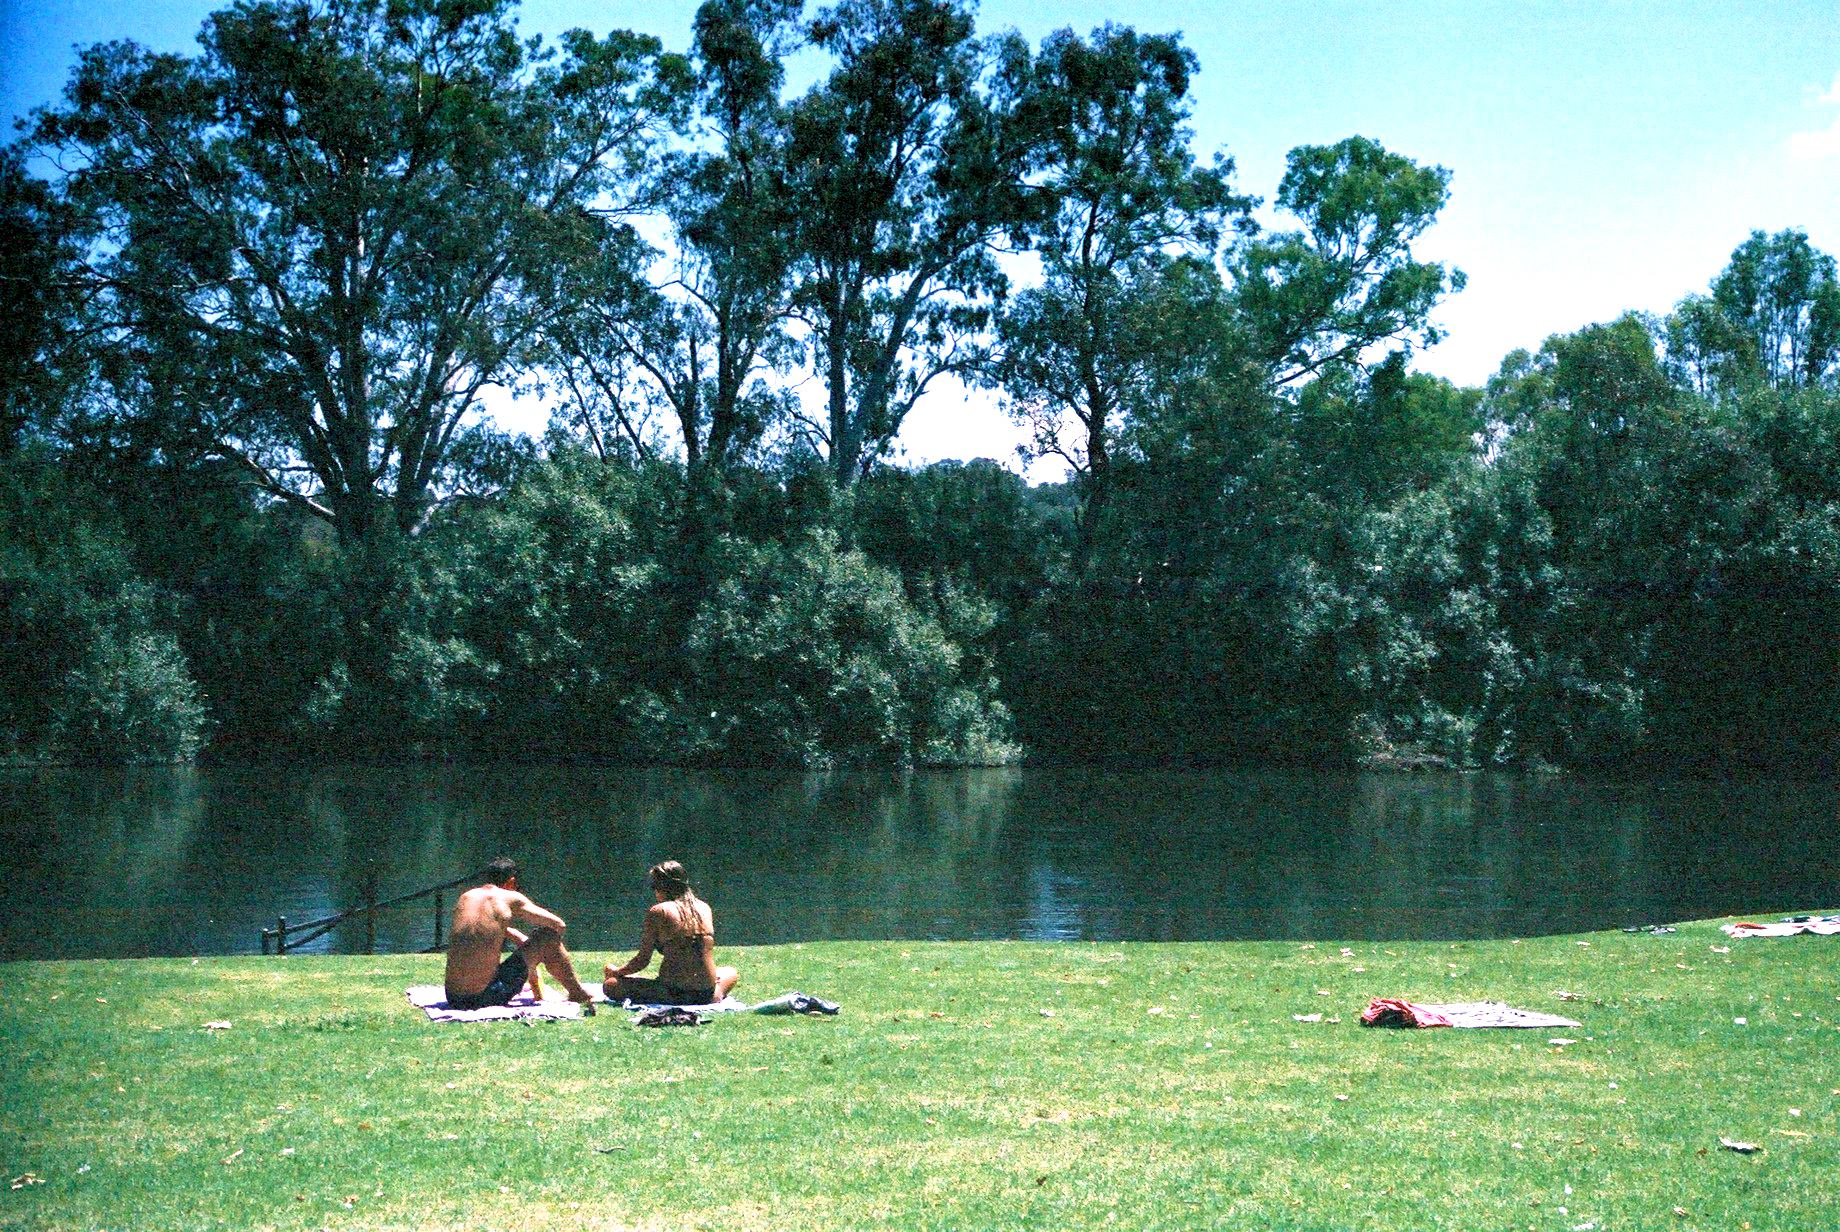 Murray River